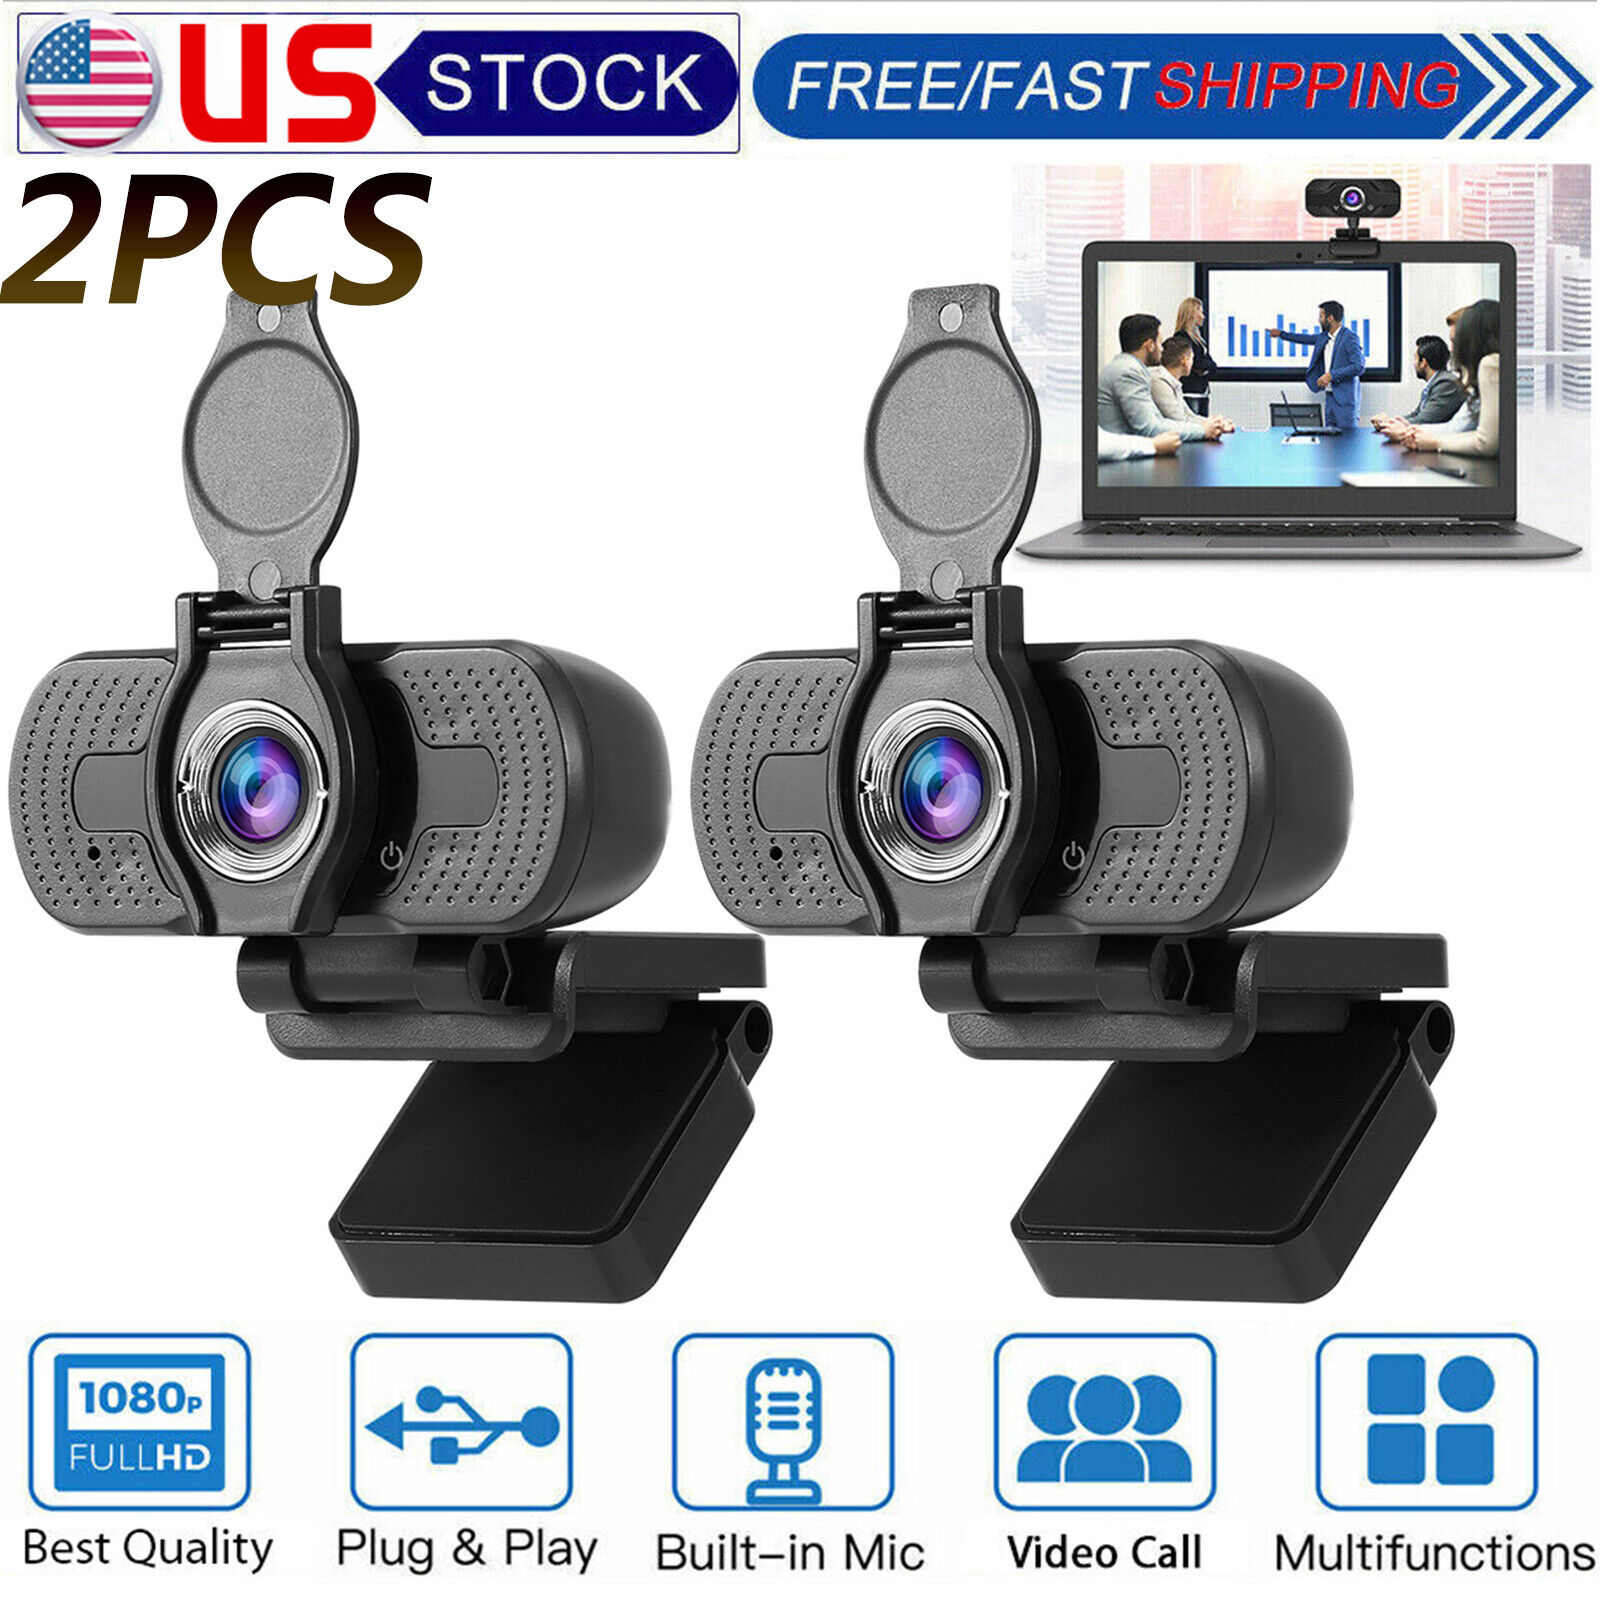 2PCS USB Webcam Full HD 1080P for Desktop Laptop Web Camera with Microphone/FHD